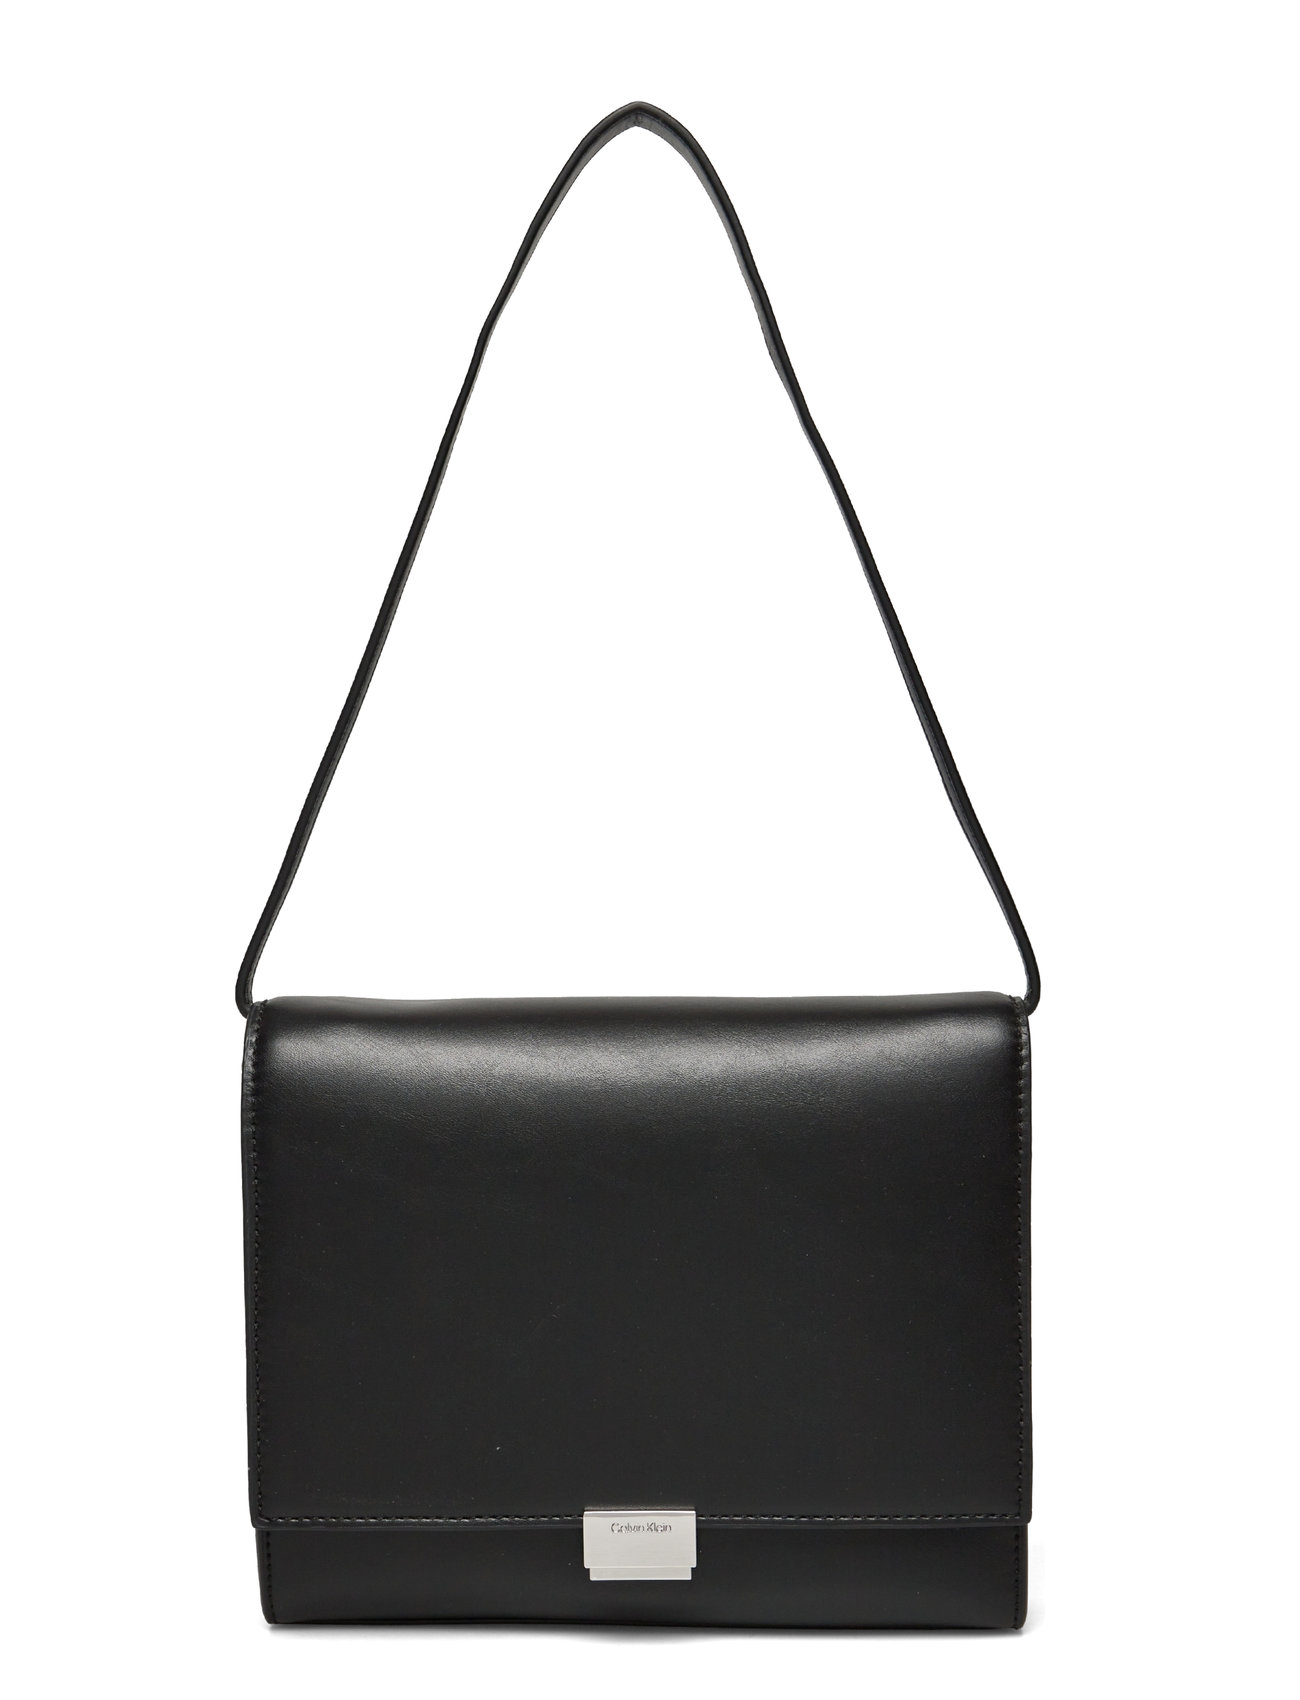 Archive Hardware Shoulder Bag Designers Top Handle Bags Black Calvin Klein